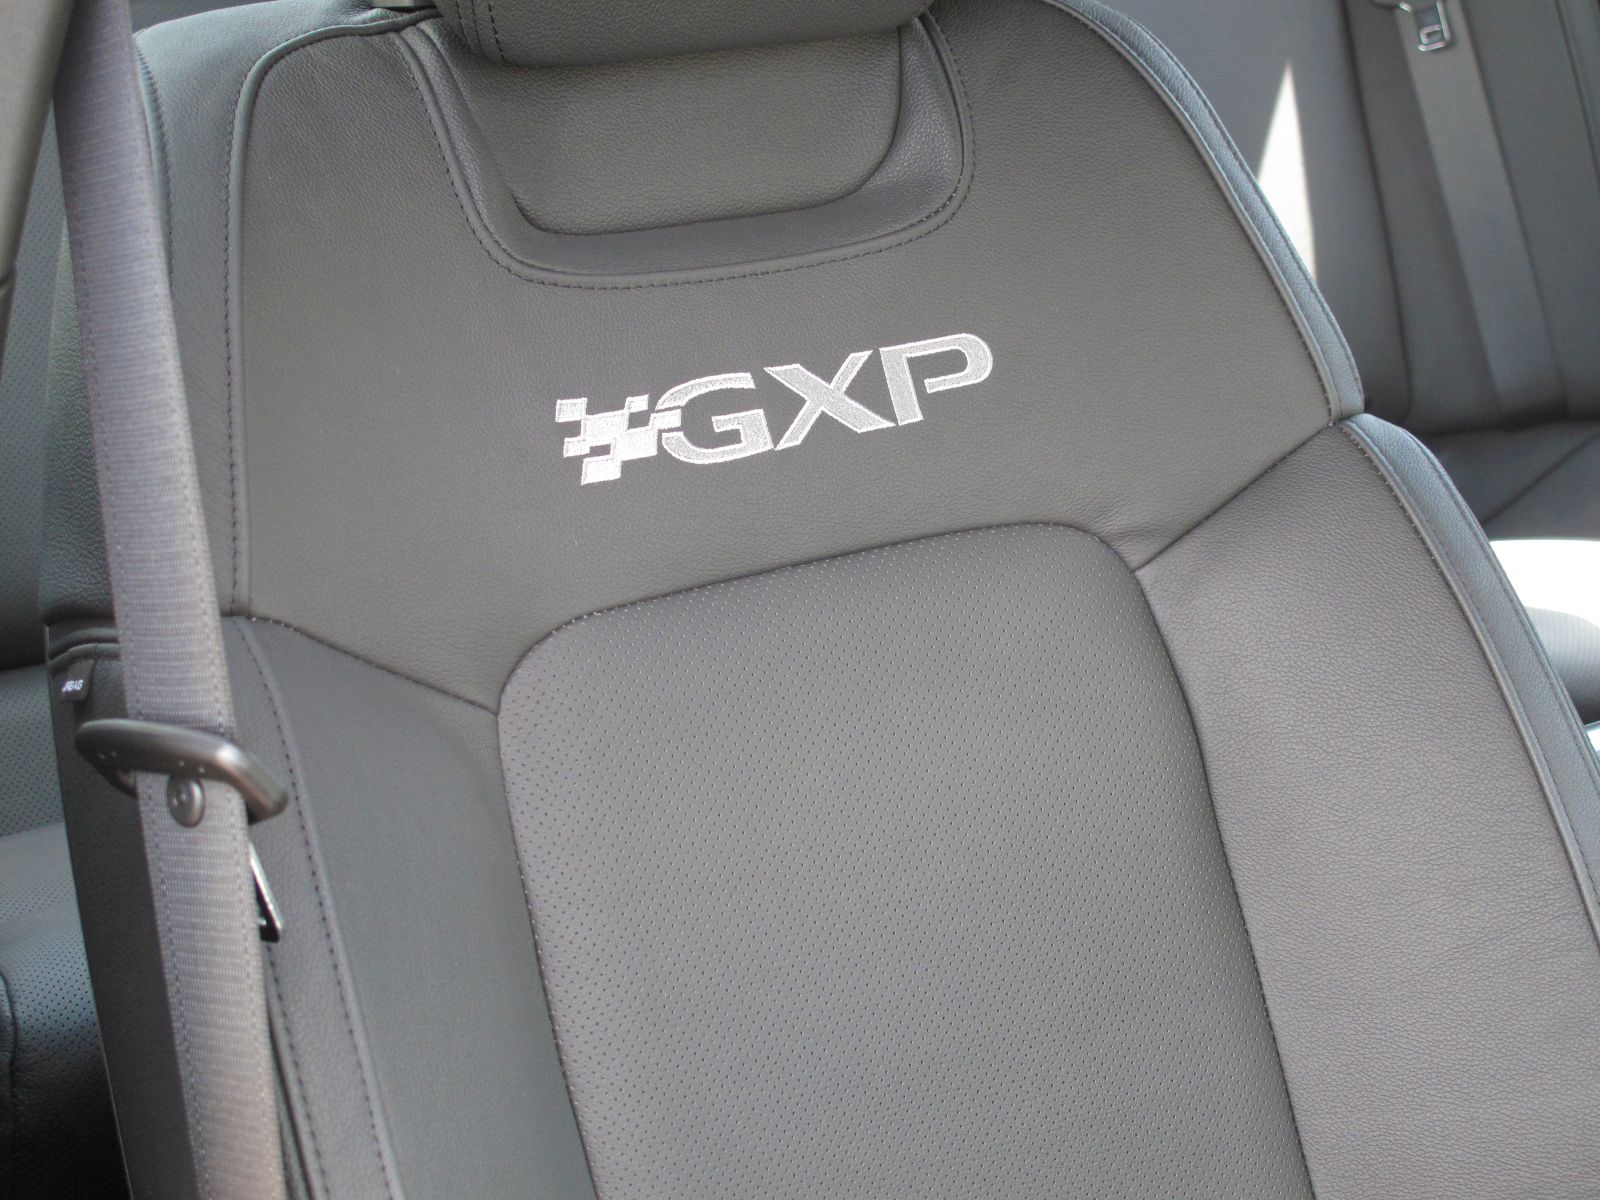 2010 Pontiac G8 GXP